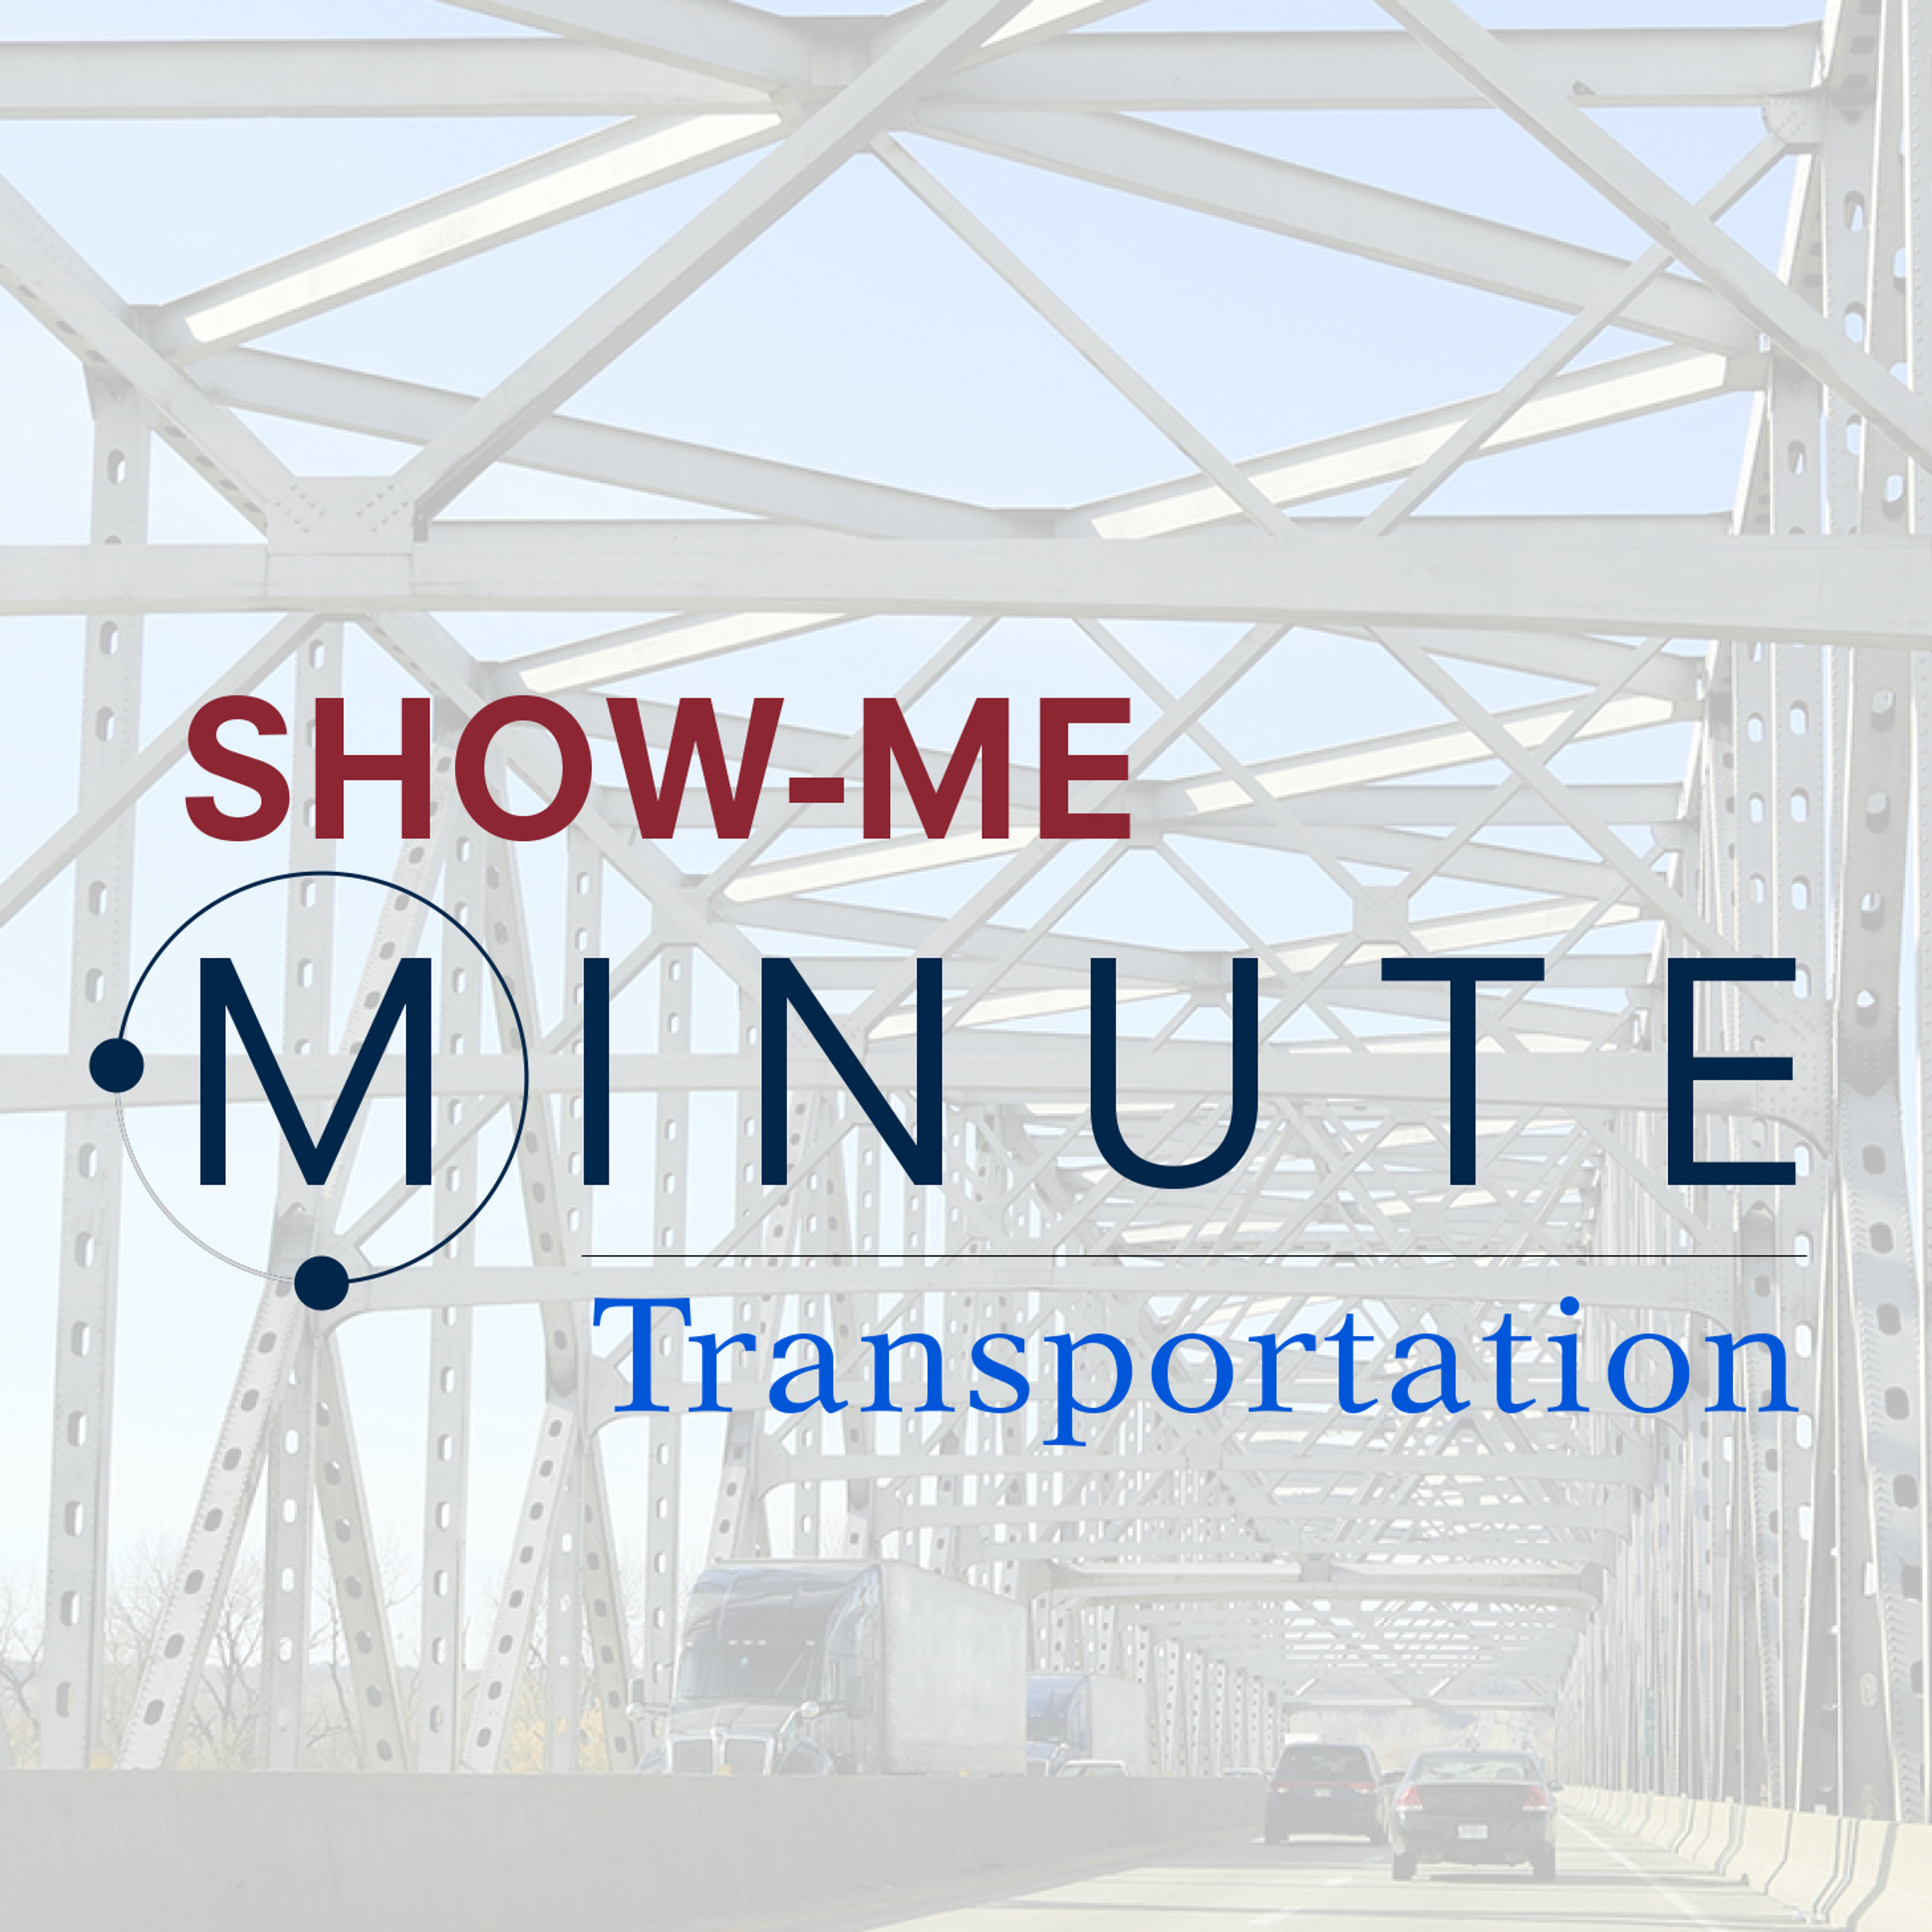 Show-Me Minute: Transportation